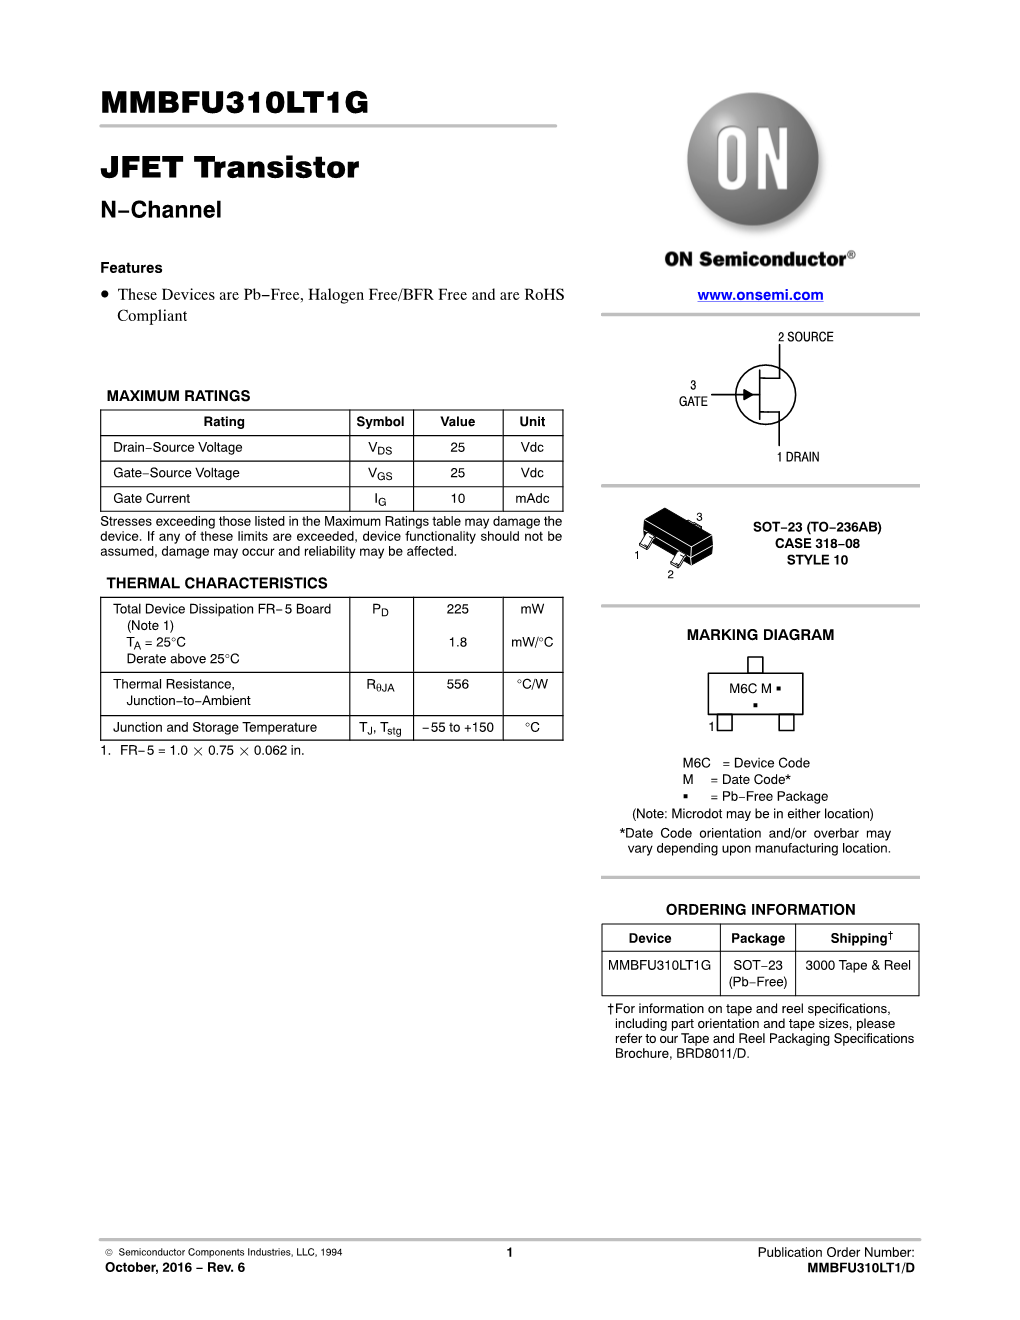 JFET Transistor N-Channel